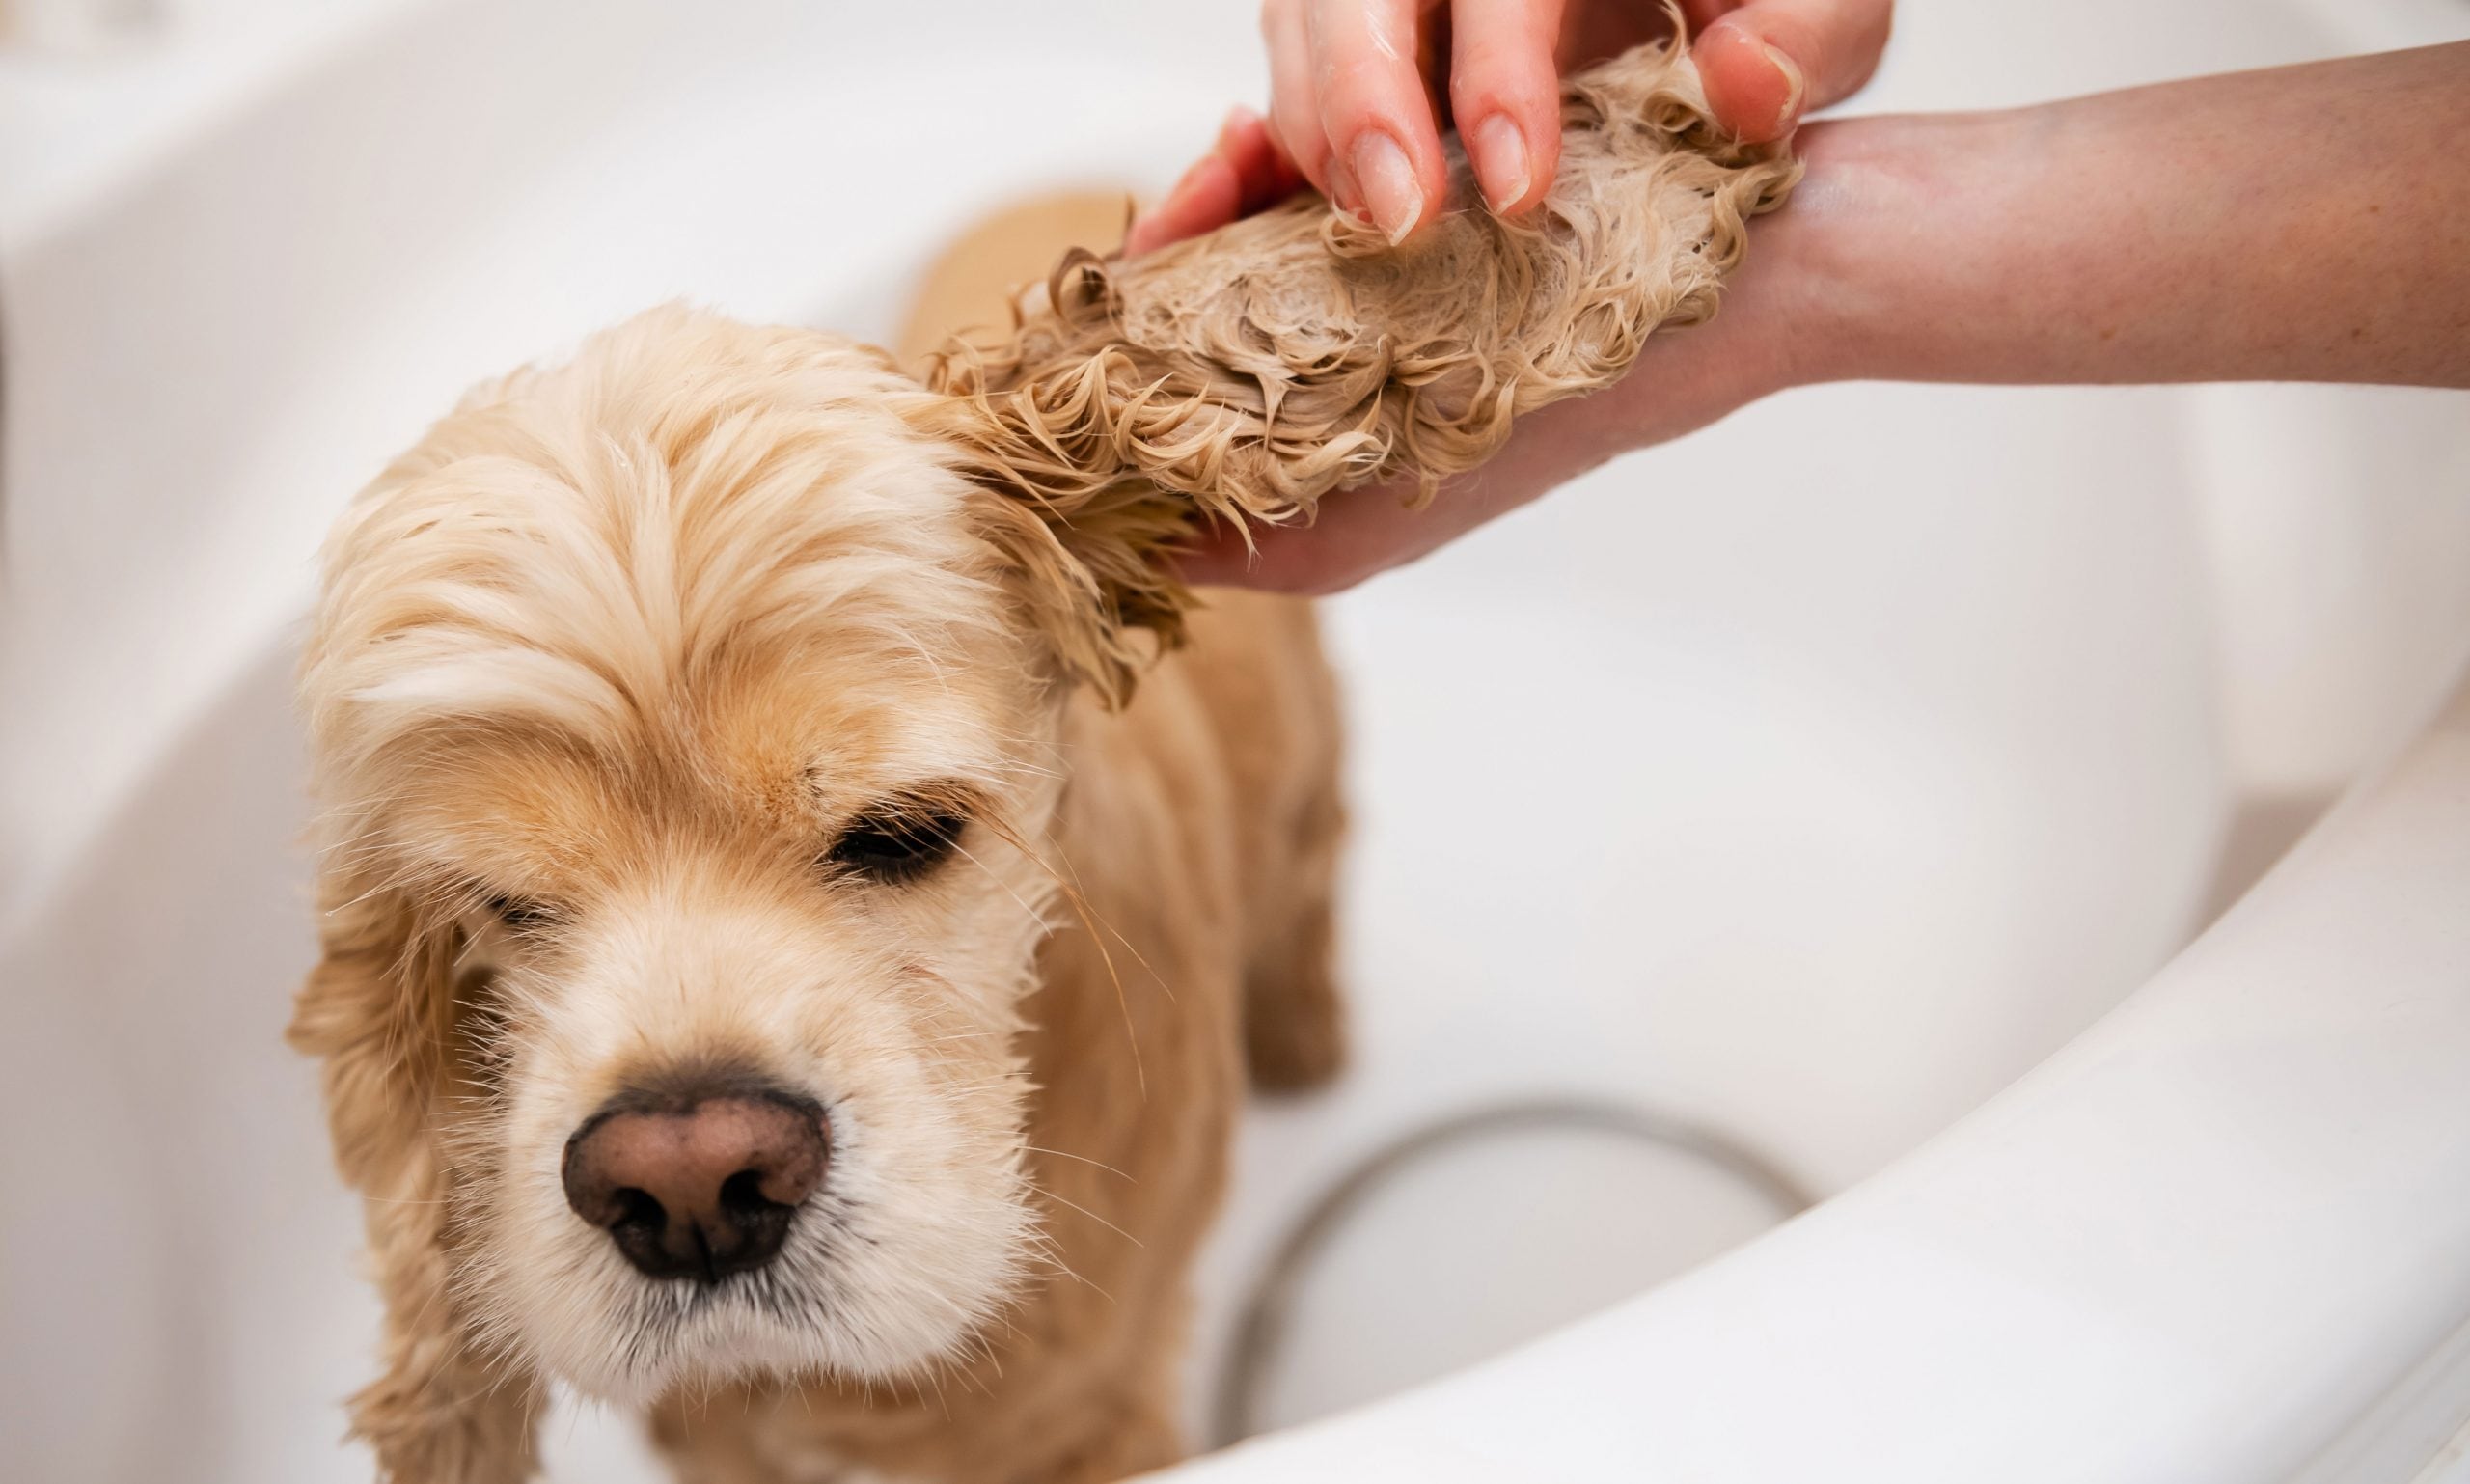 dog grooming mistakes: washing inside ear